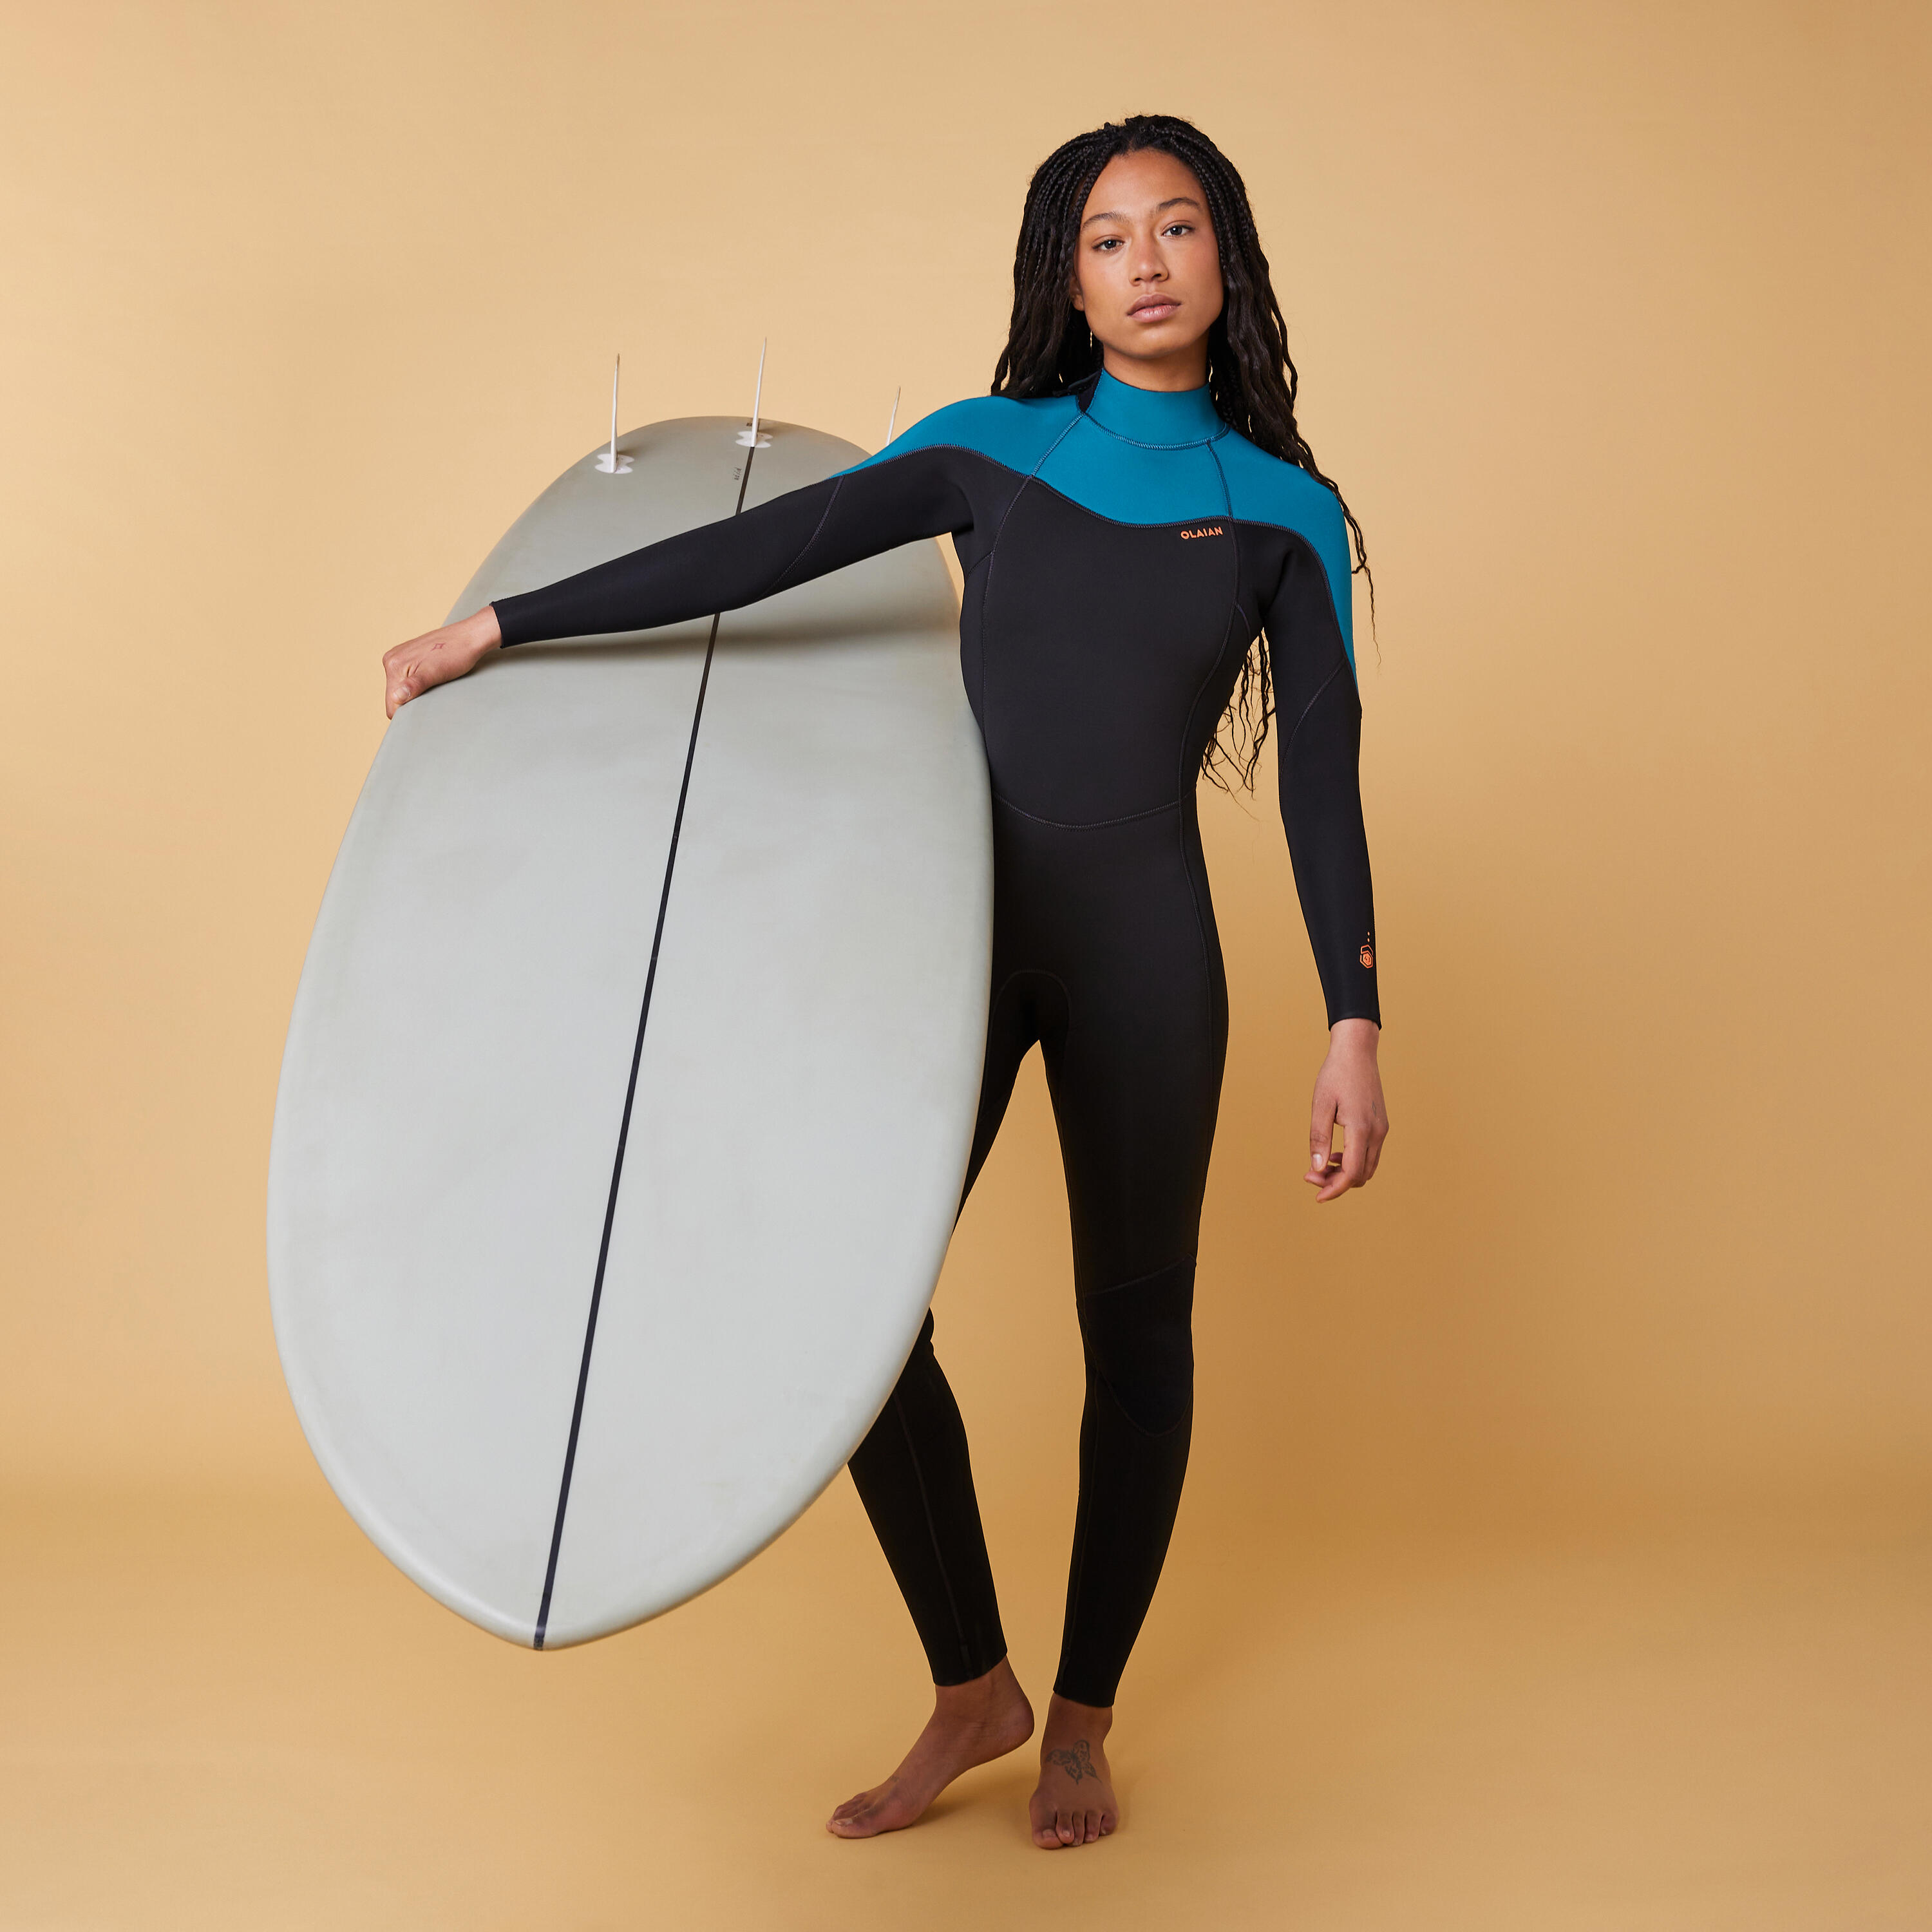 OLAIAN Neoprenanzug Surfen Damen 4/3 Rückenreissverschluss - 500 schwarz/grün L